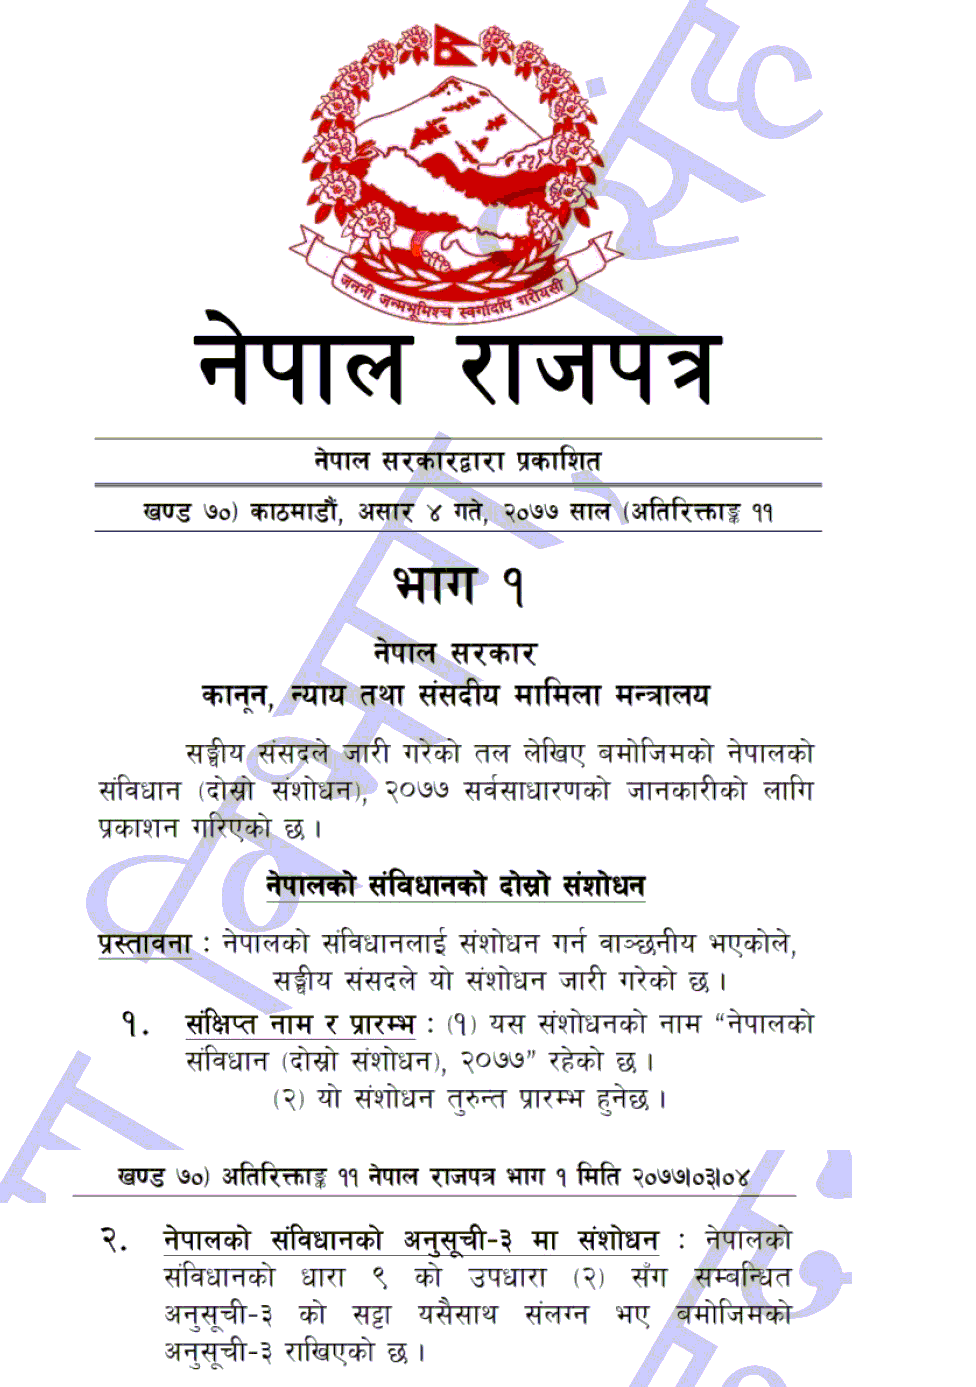 Notice Regarding the use of the Emblem of Nepal 1